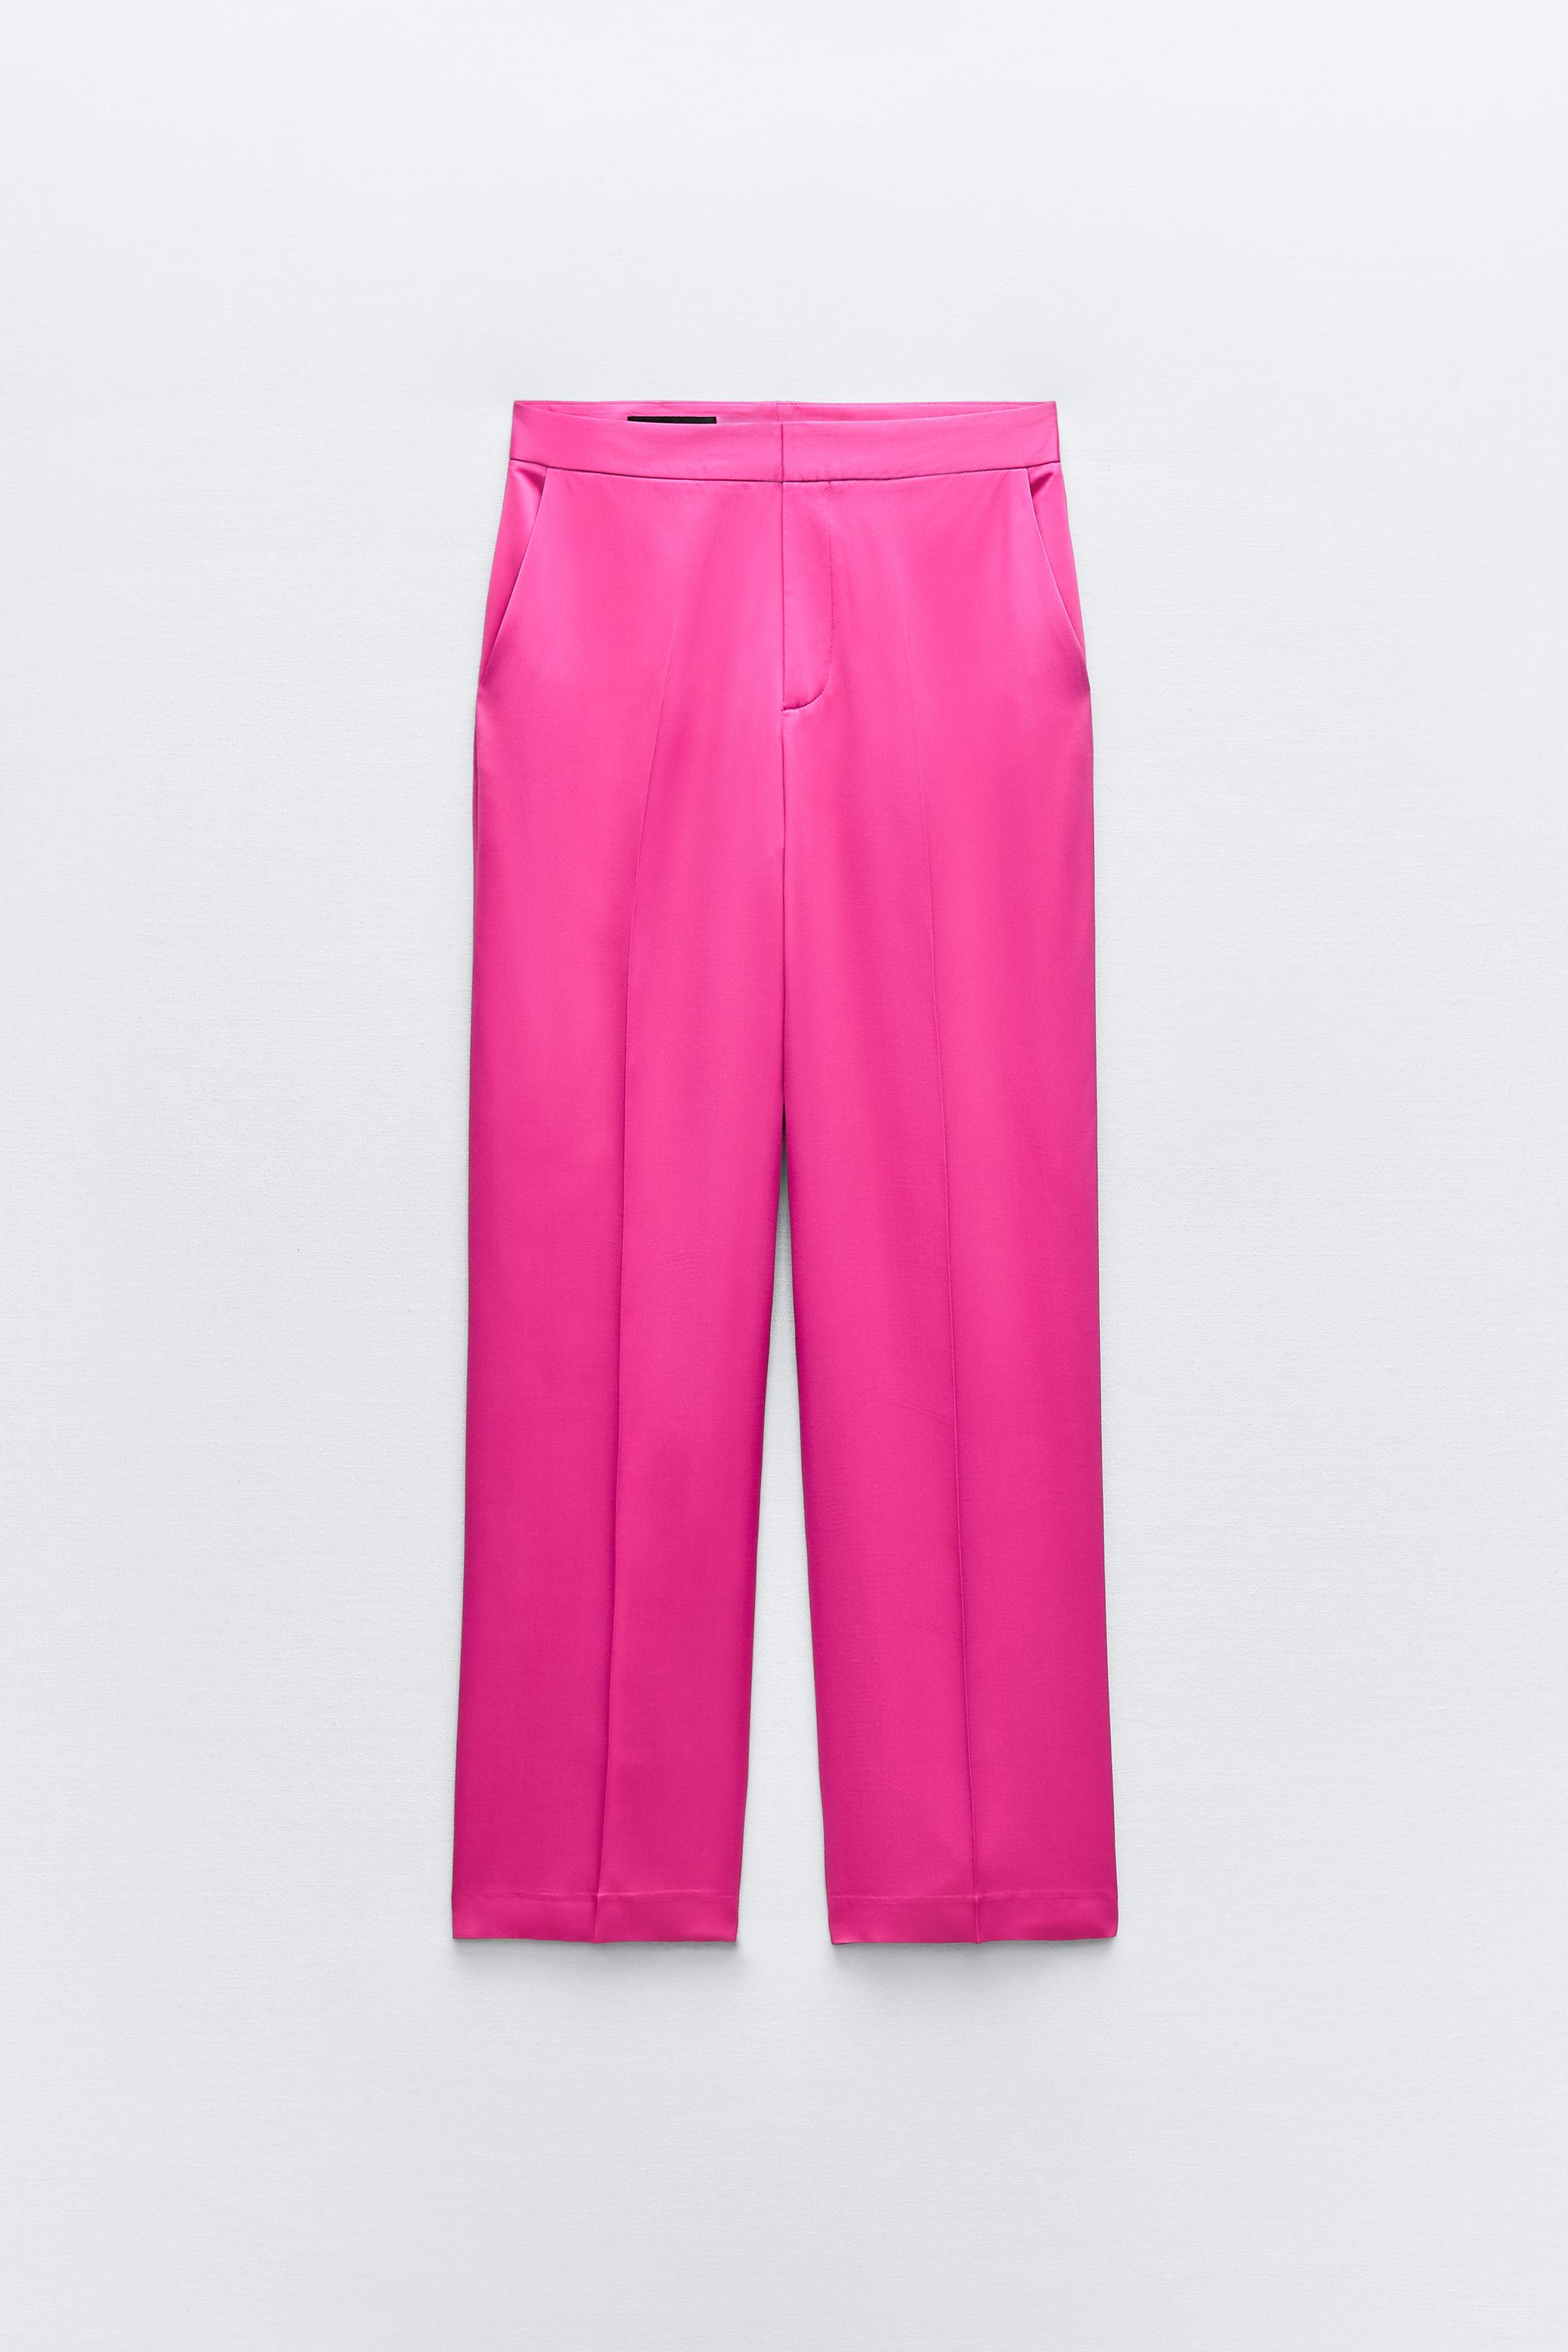 BALLANTYNE, Pink Women's Casual Pants